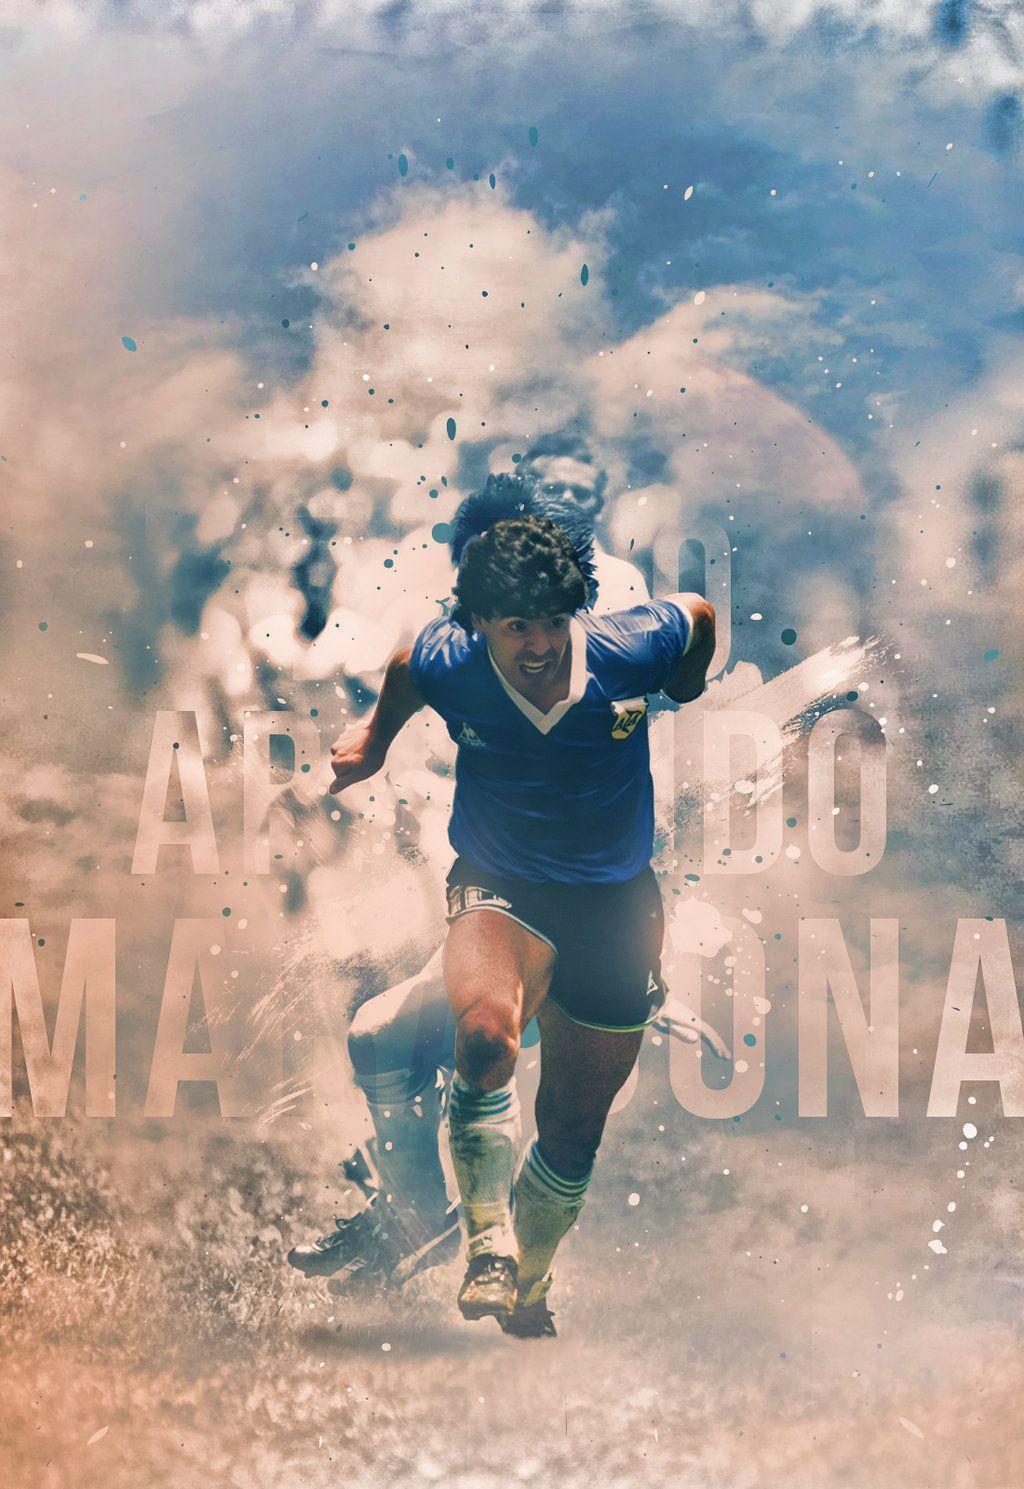 The UnOfFiCiAl EDITS on Twitter Presenting The Wallpaper Of DIEGO ARMANDO  MARADONA Pelusa  Boca X Argentina  A like Retweet would be appreciated   MaradonaOnPrime MaradonaTV DiegoEterno Maradona Trending  httpstco0G83HqBqmR 